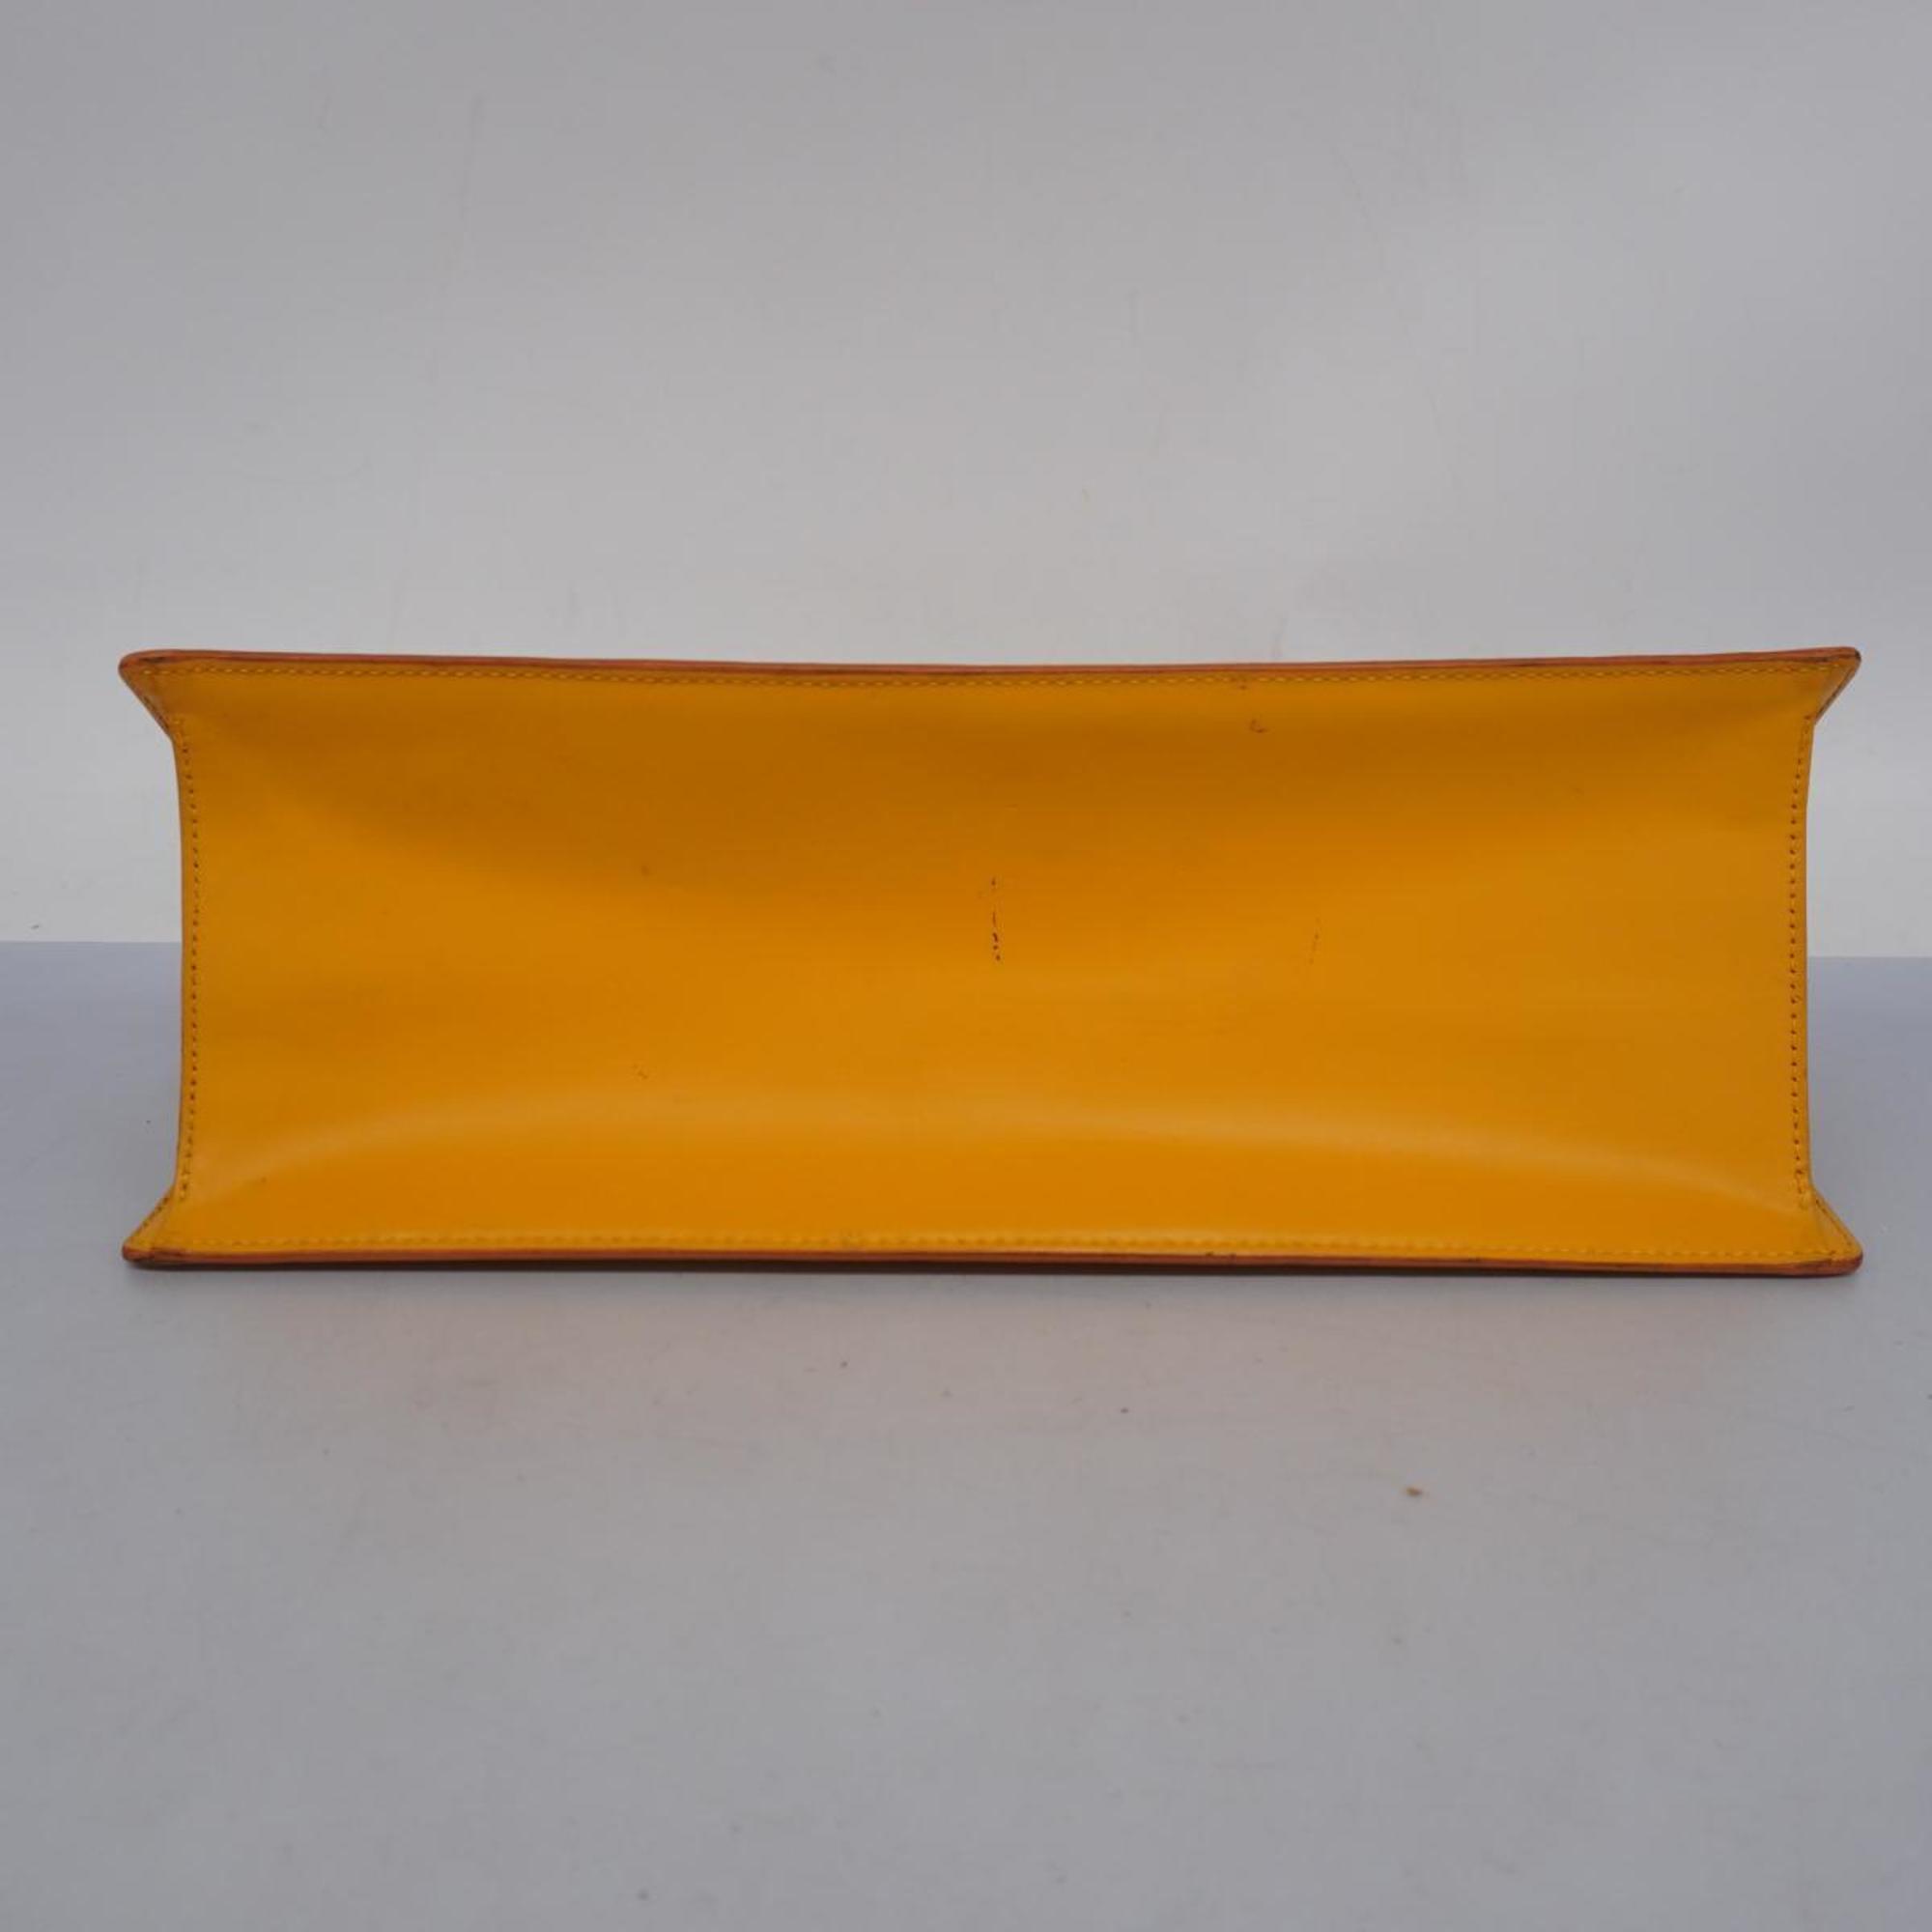 Louis Vuitton Epi Sac Triangle Handbag M52099 Jaune Ladies